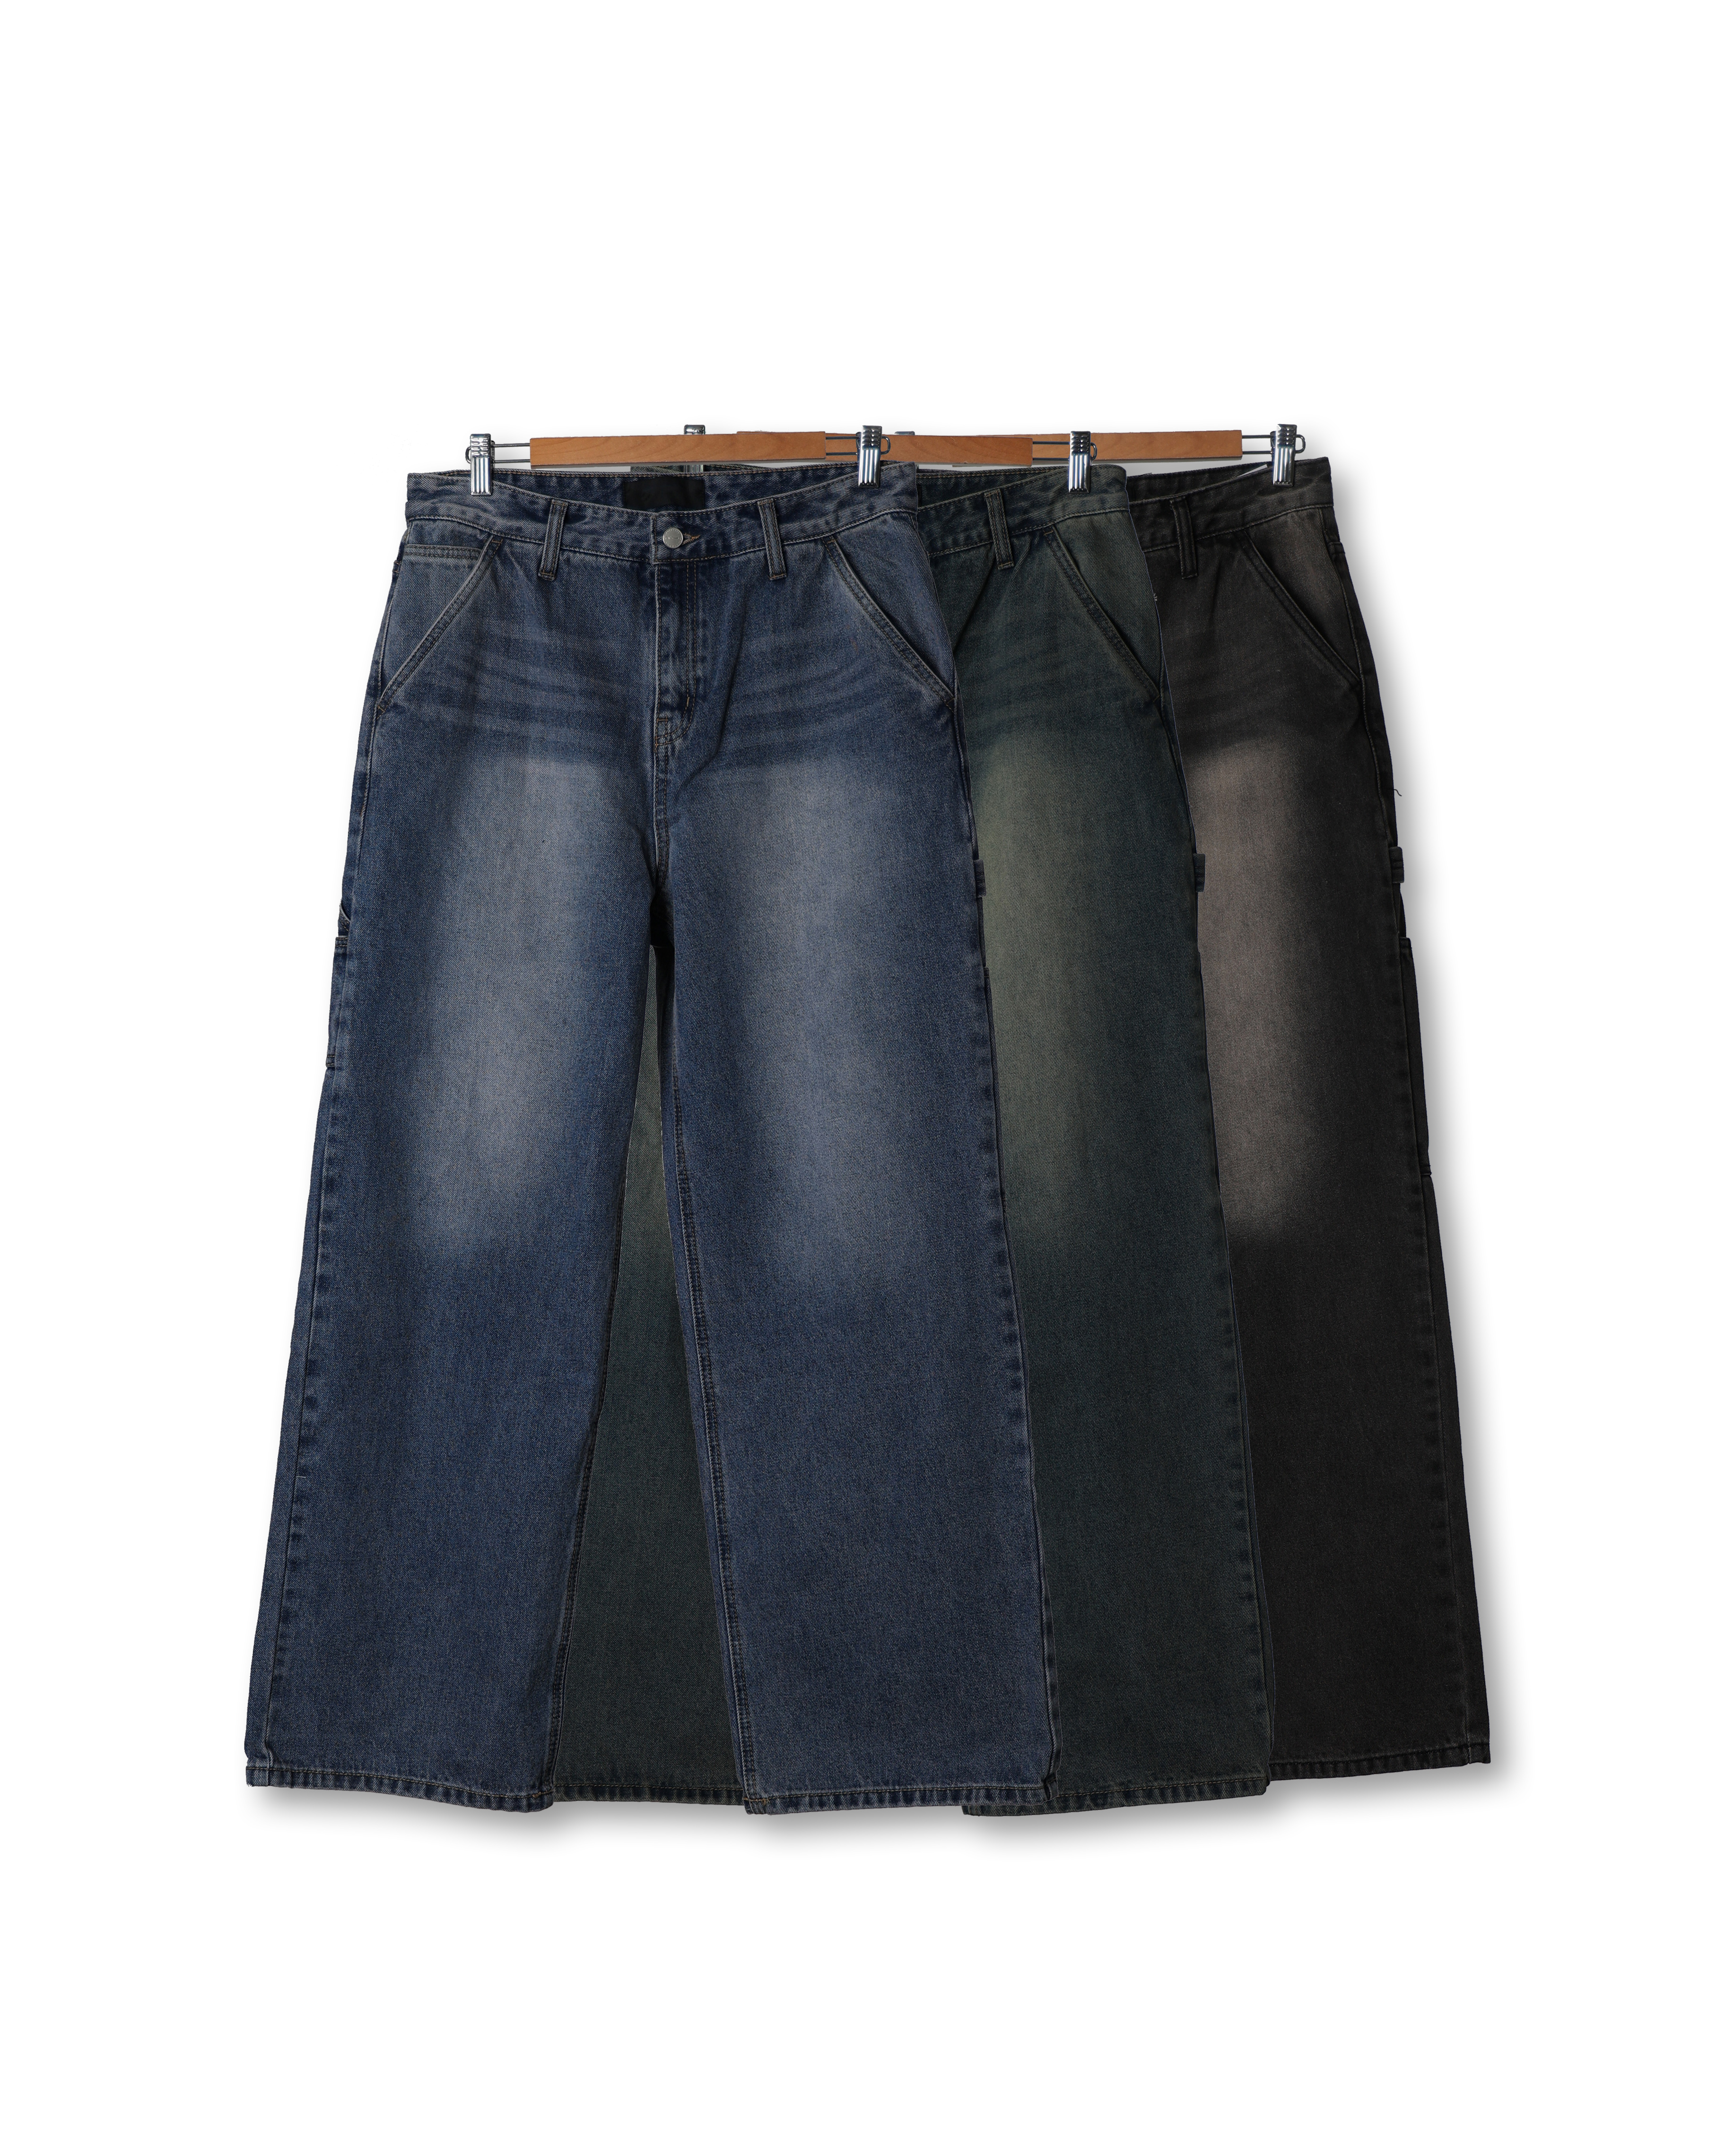 T.CRSS 453 Vintage Washed Work Denim Pants (Black Denim/Yellow Denim/Pink Denim)